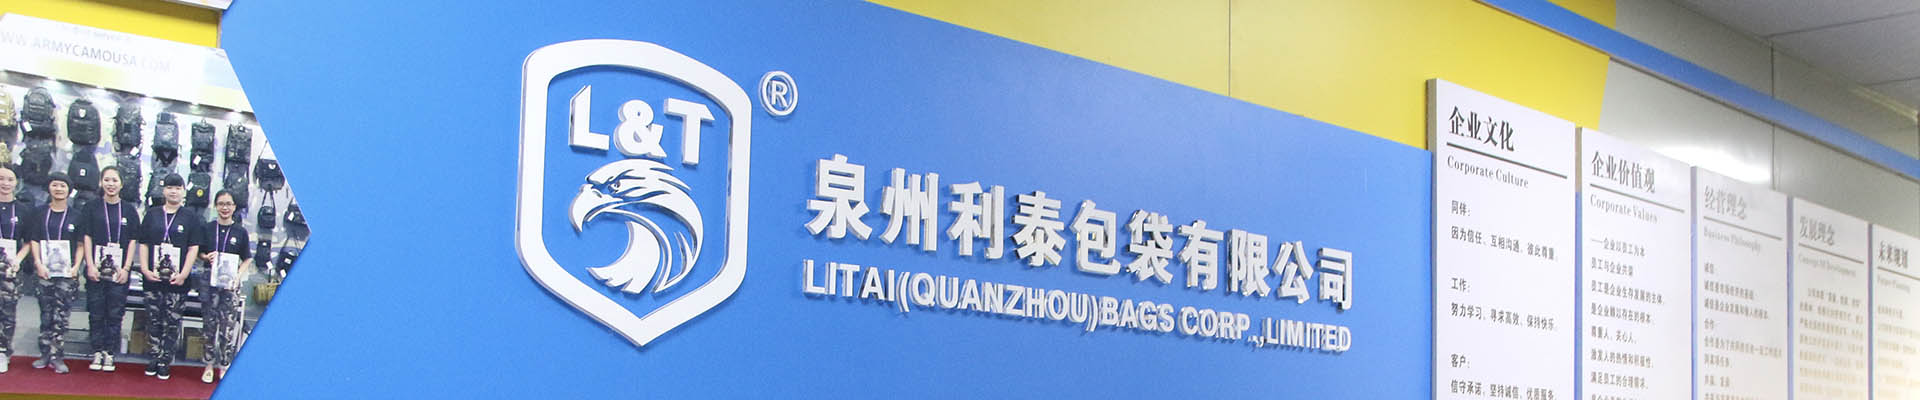 Litai Military Backpack manufacturer